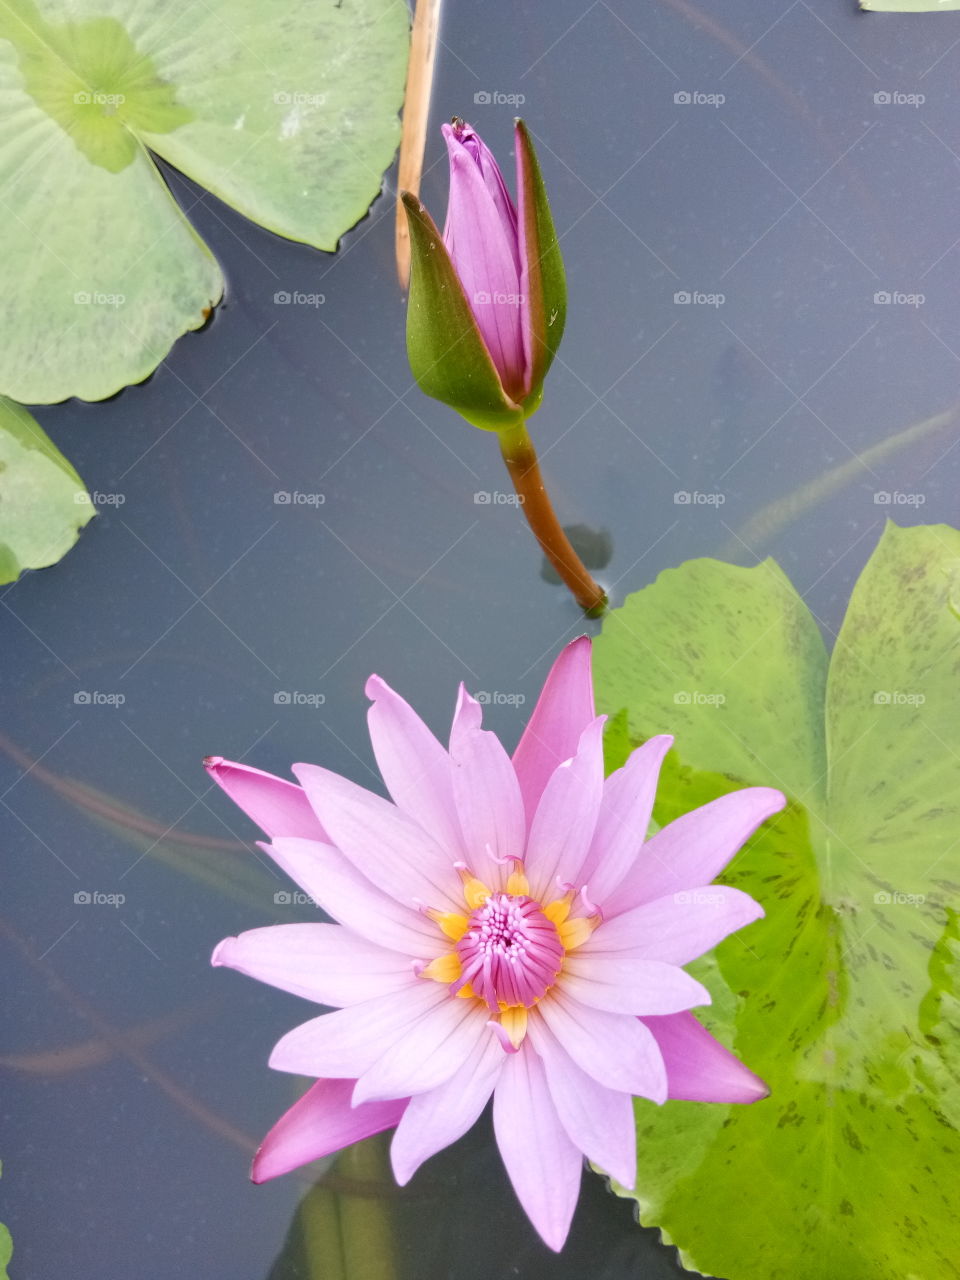 Lotus : Flower at king rama 9 :National park of thailand.Beautiful.